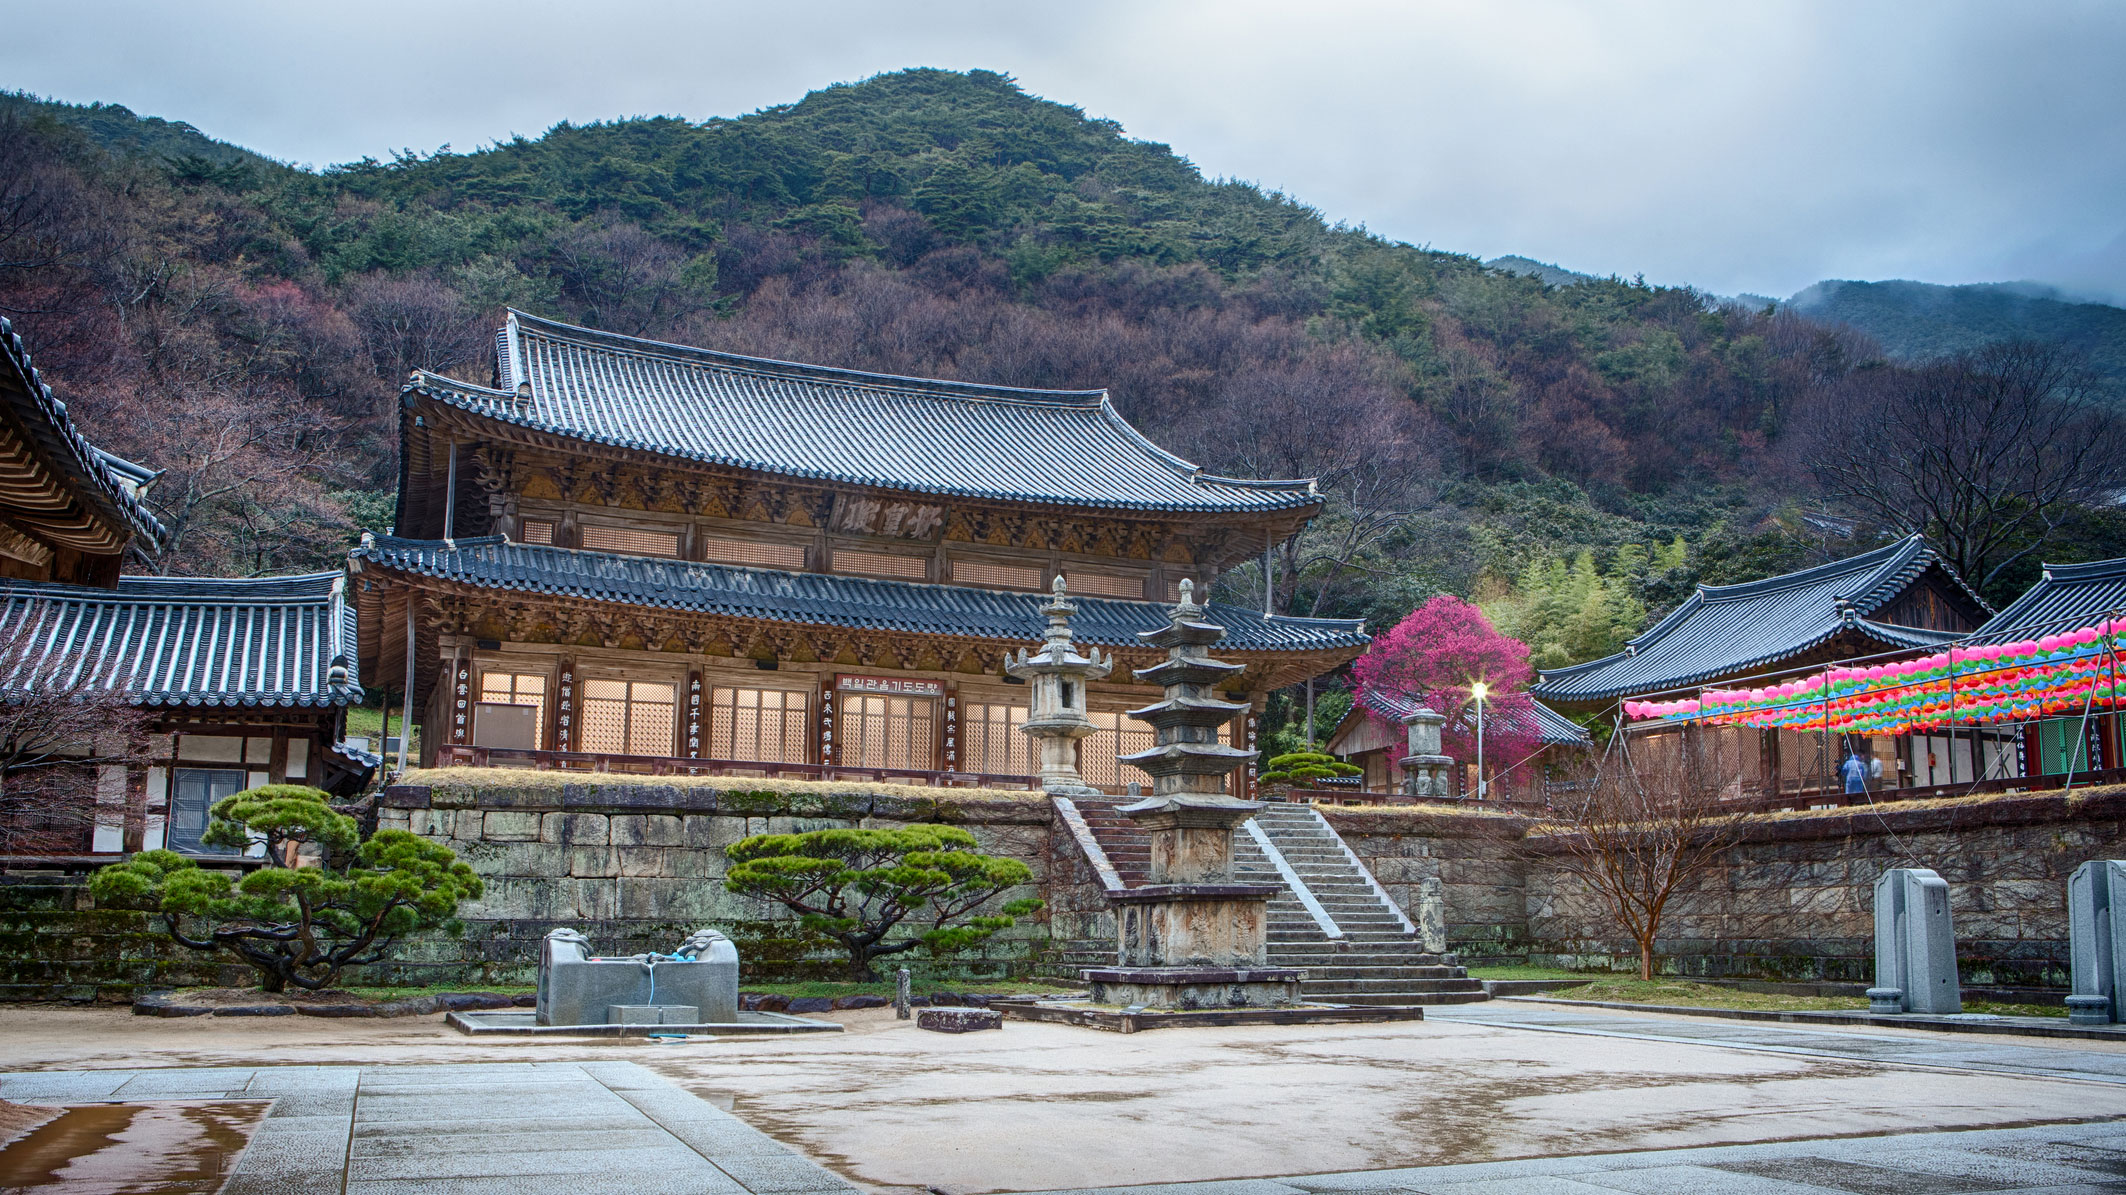 of South Korea's beautiful | CNN Travel